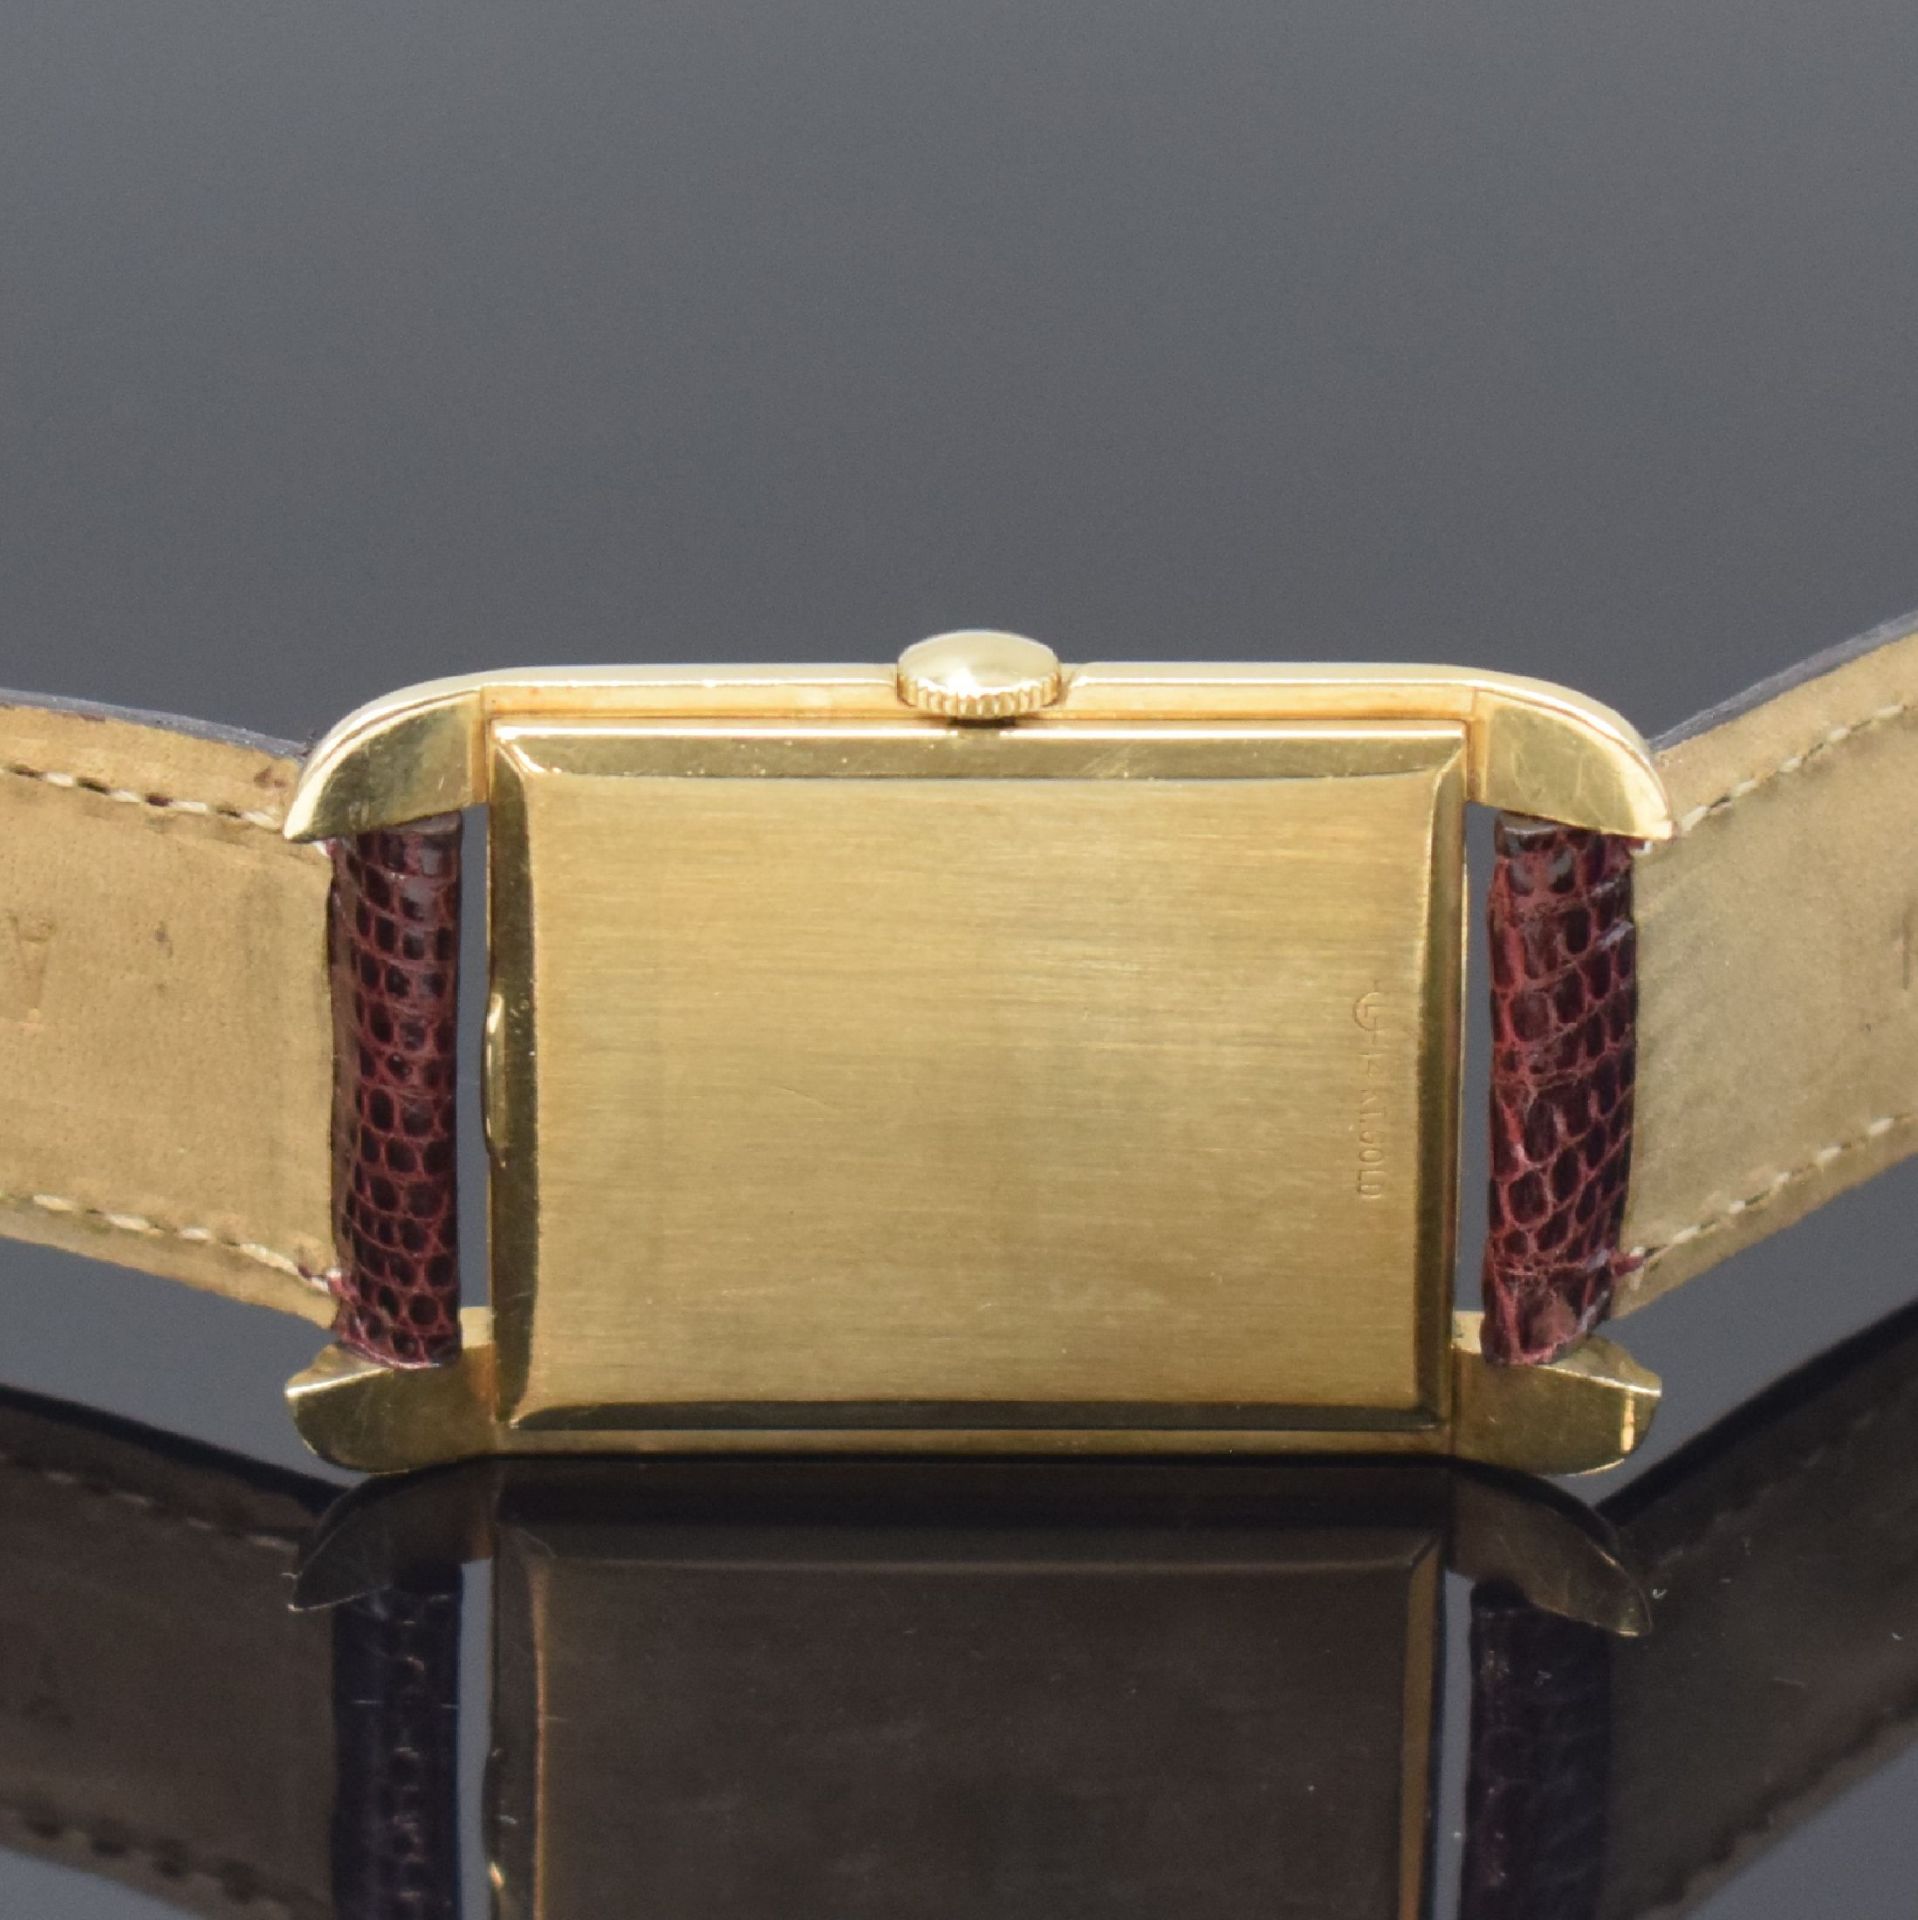 Le COULTRE rechteckige Armbanduhr in 14k goldfilled, - Bild 4 aus 6